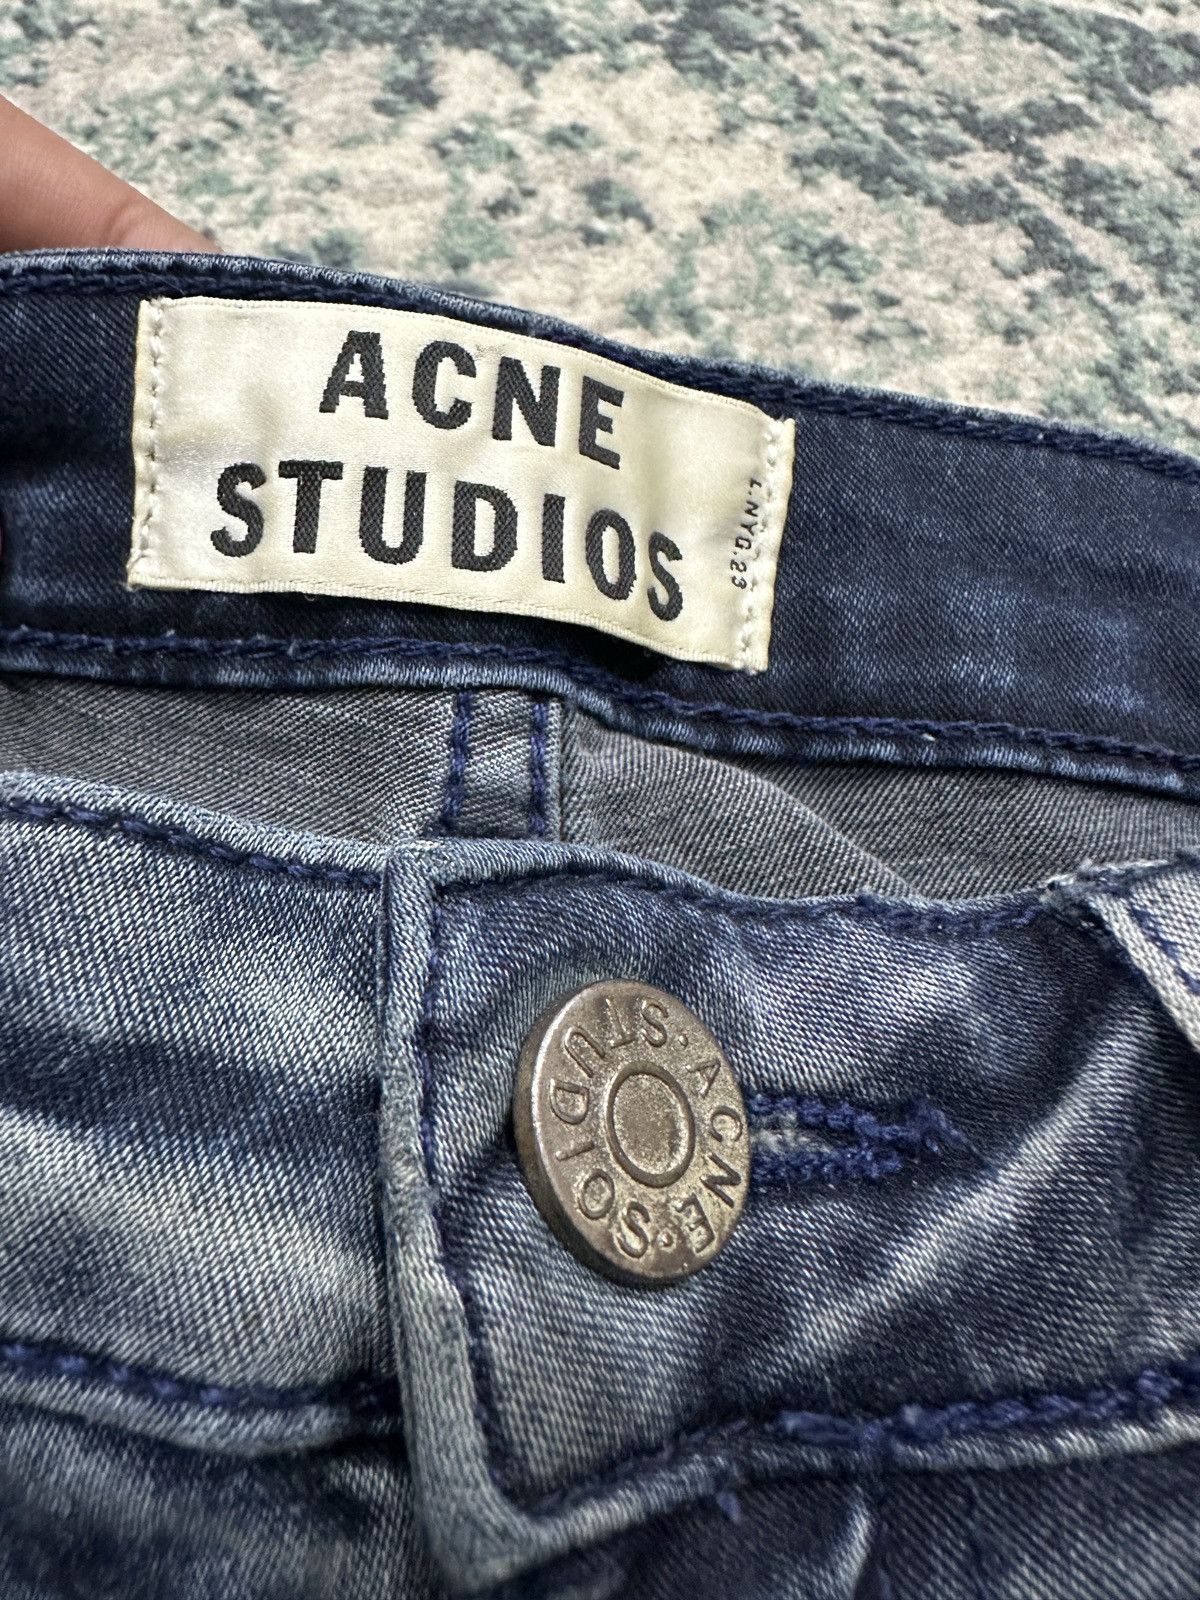 Acne Studios Acne Skin 5 Denim Jeans Women's - 5